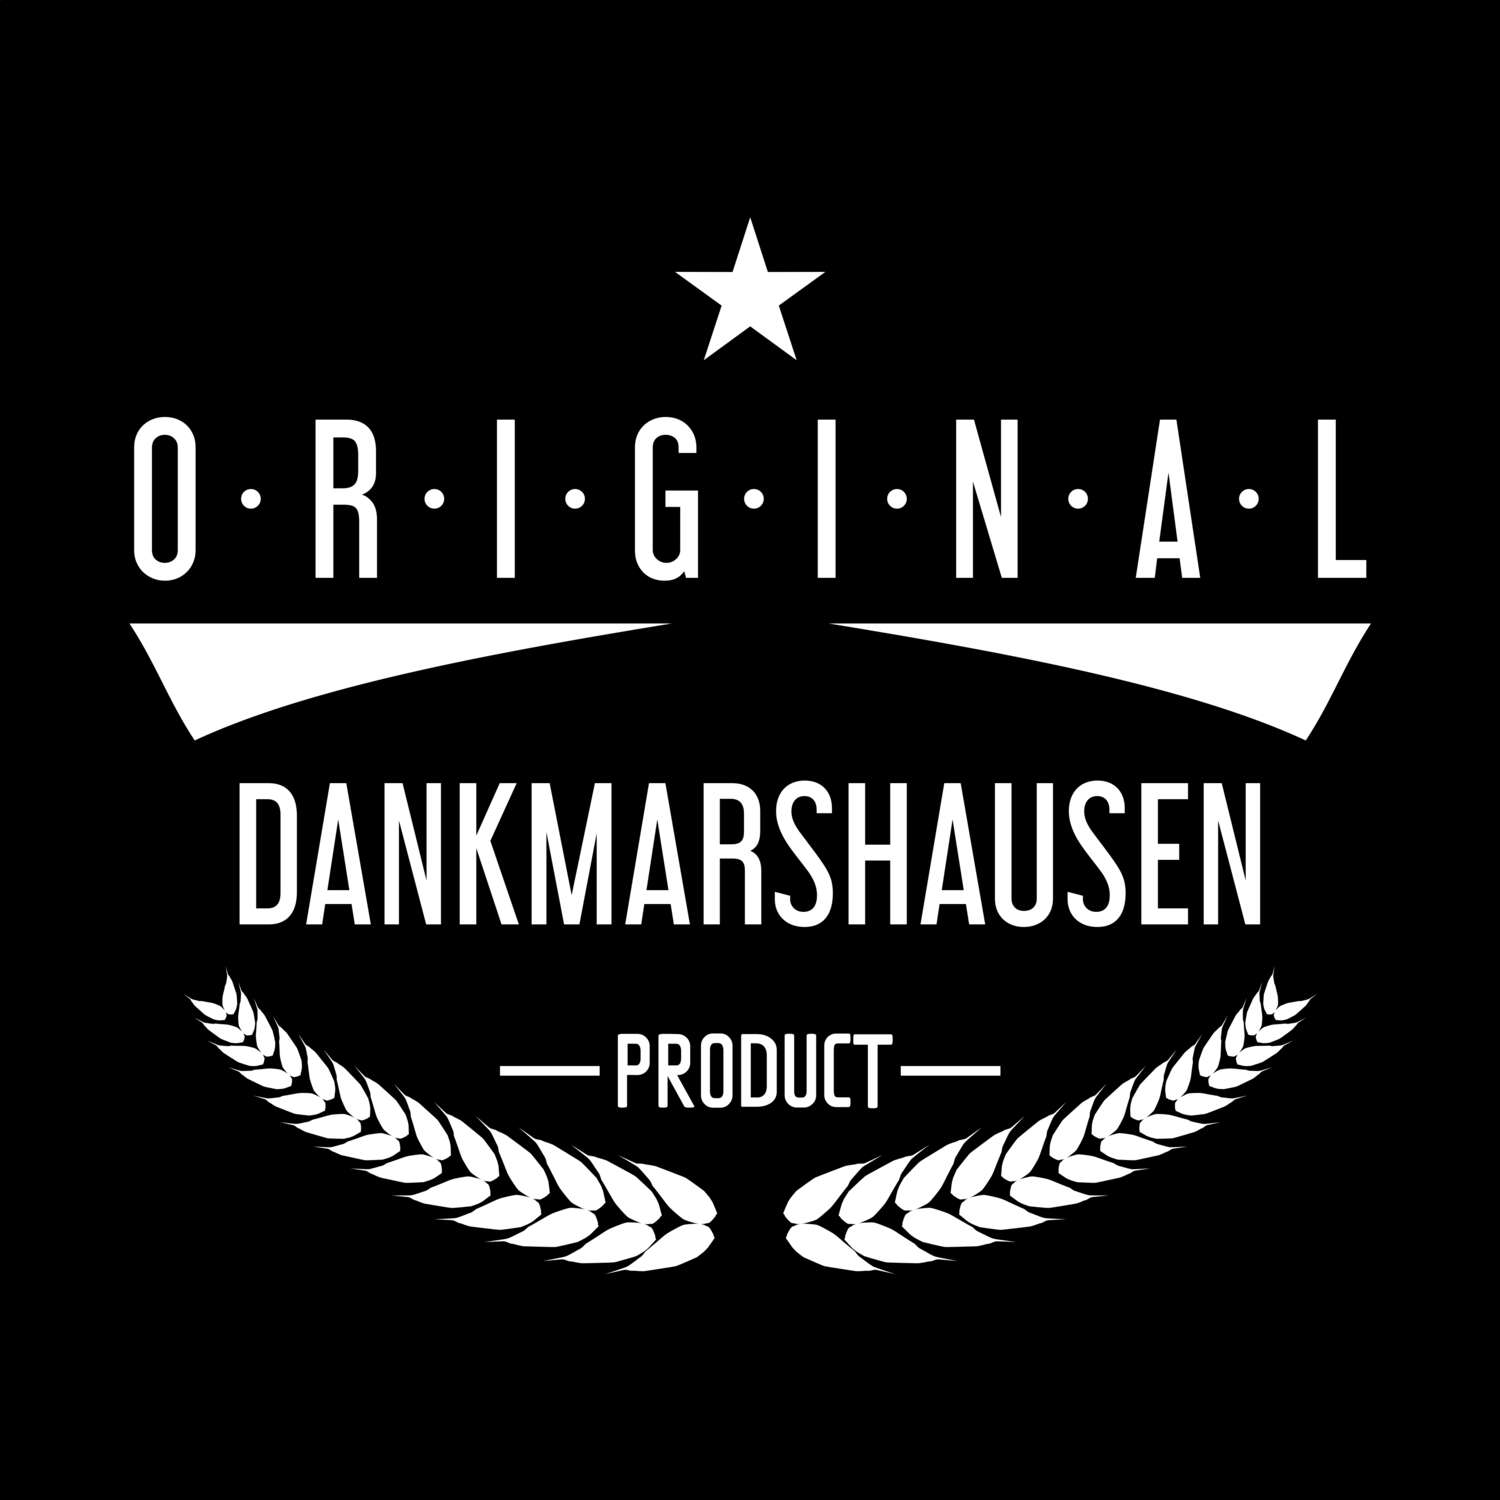 Dankmarshausen T-Shirt »Original Product«